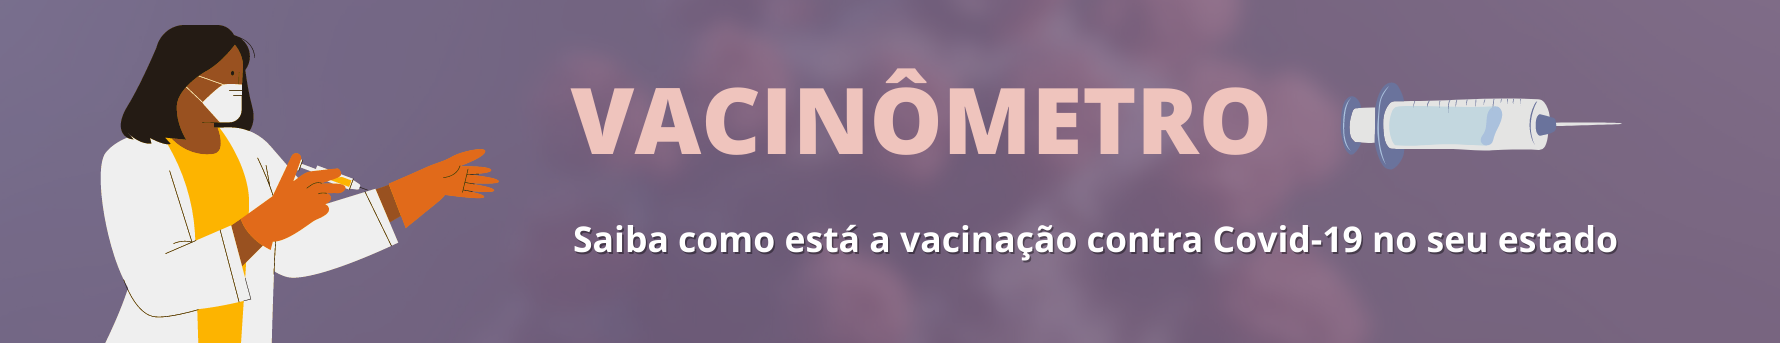 Vacinometro